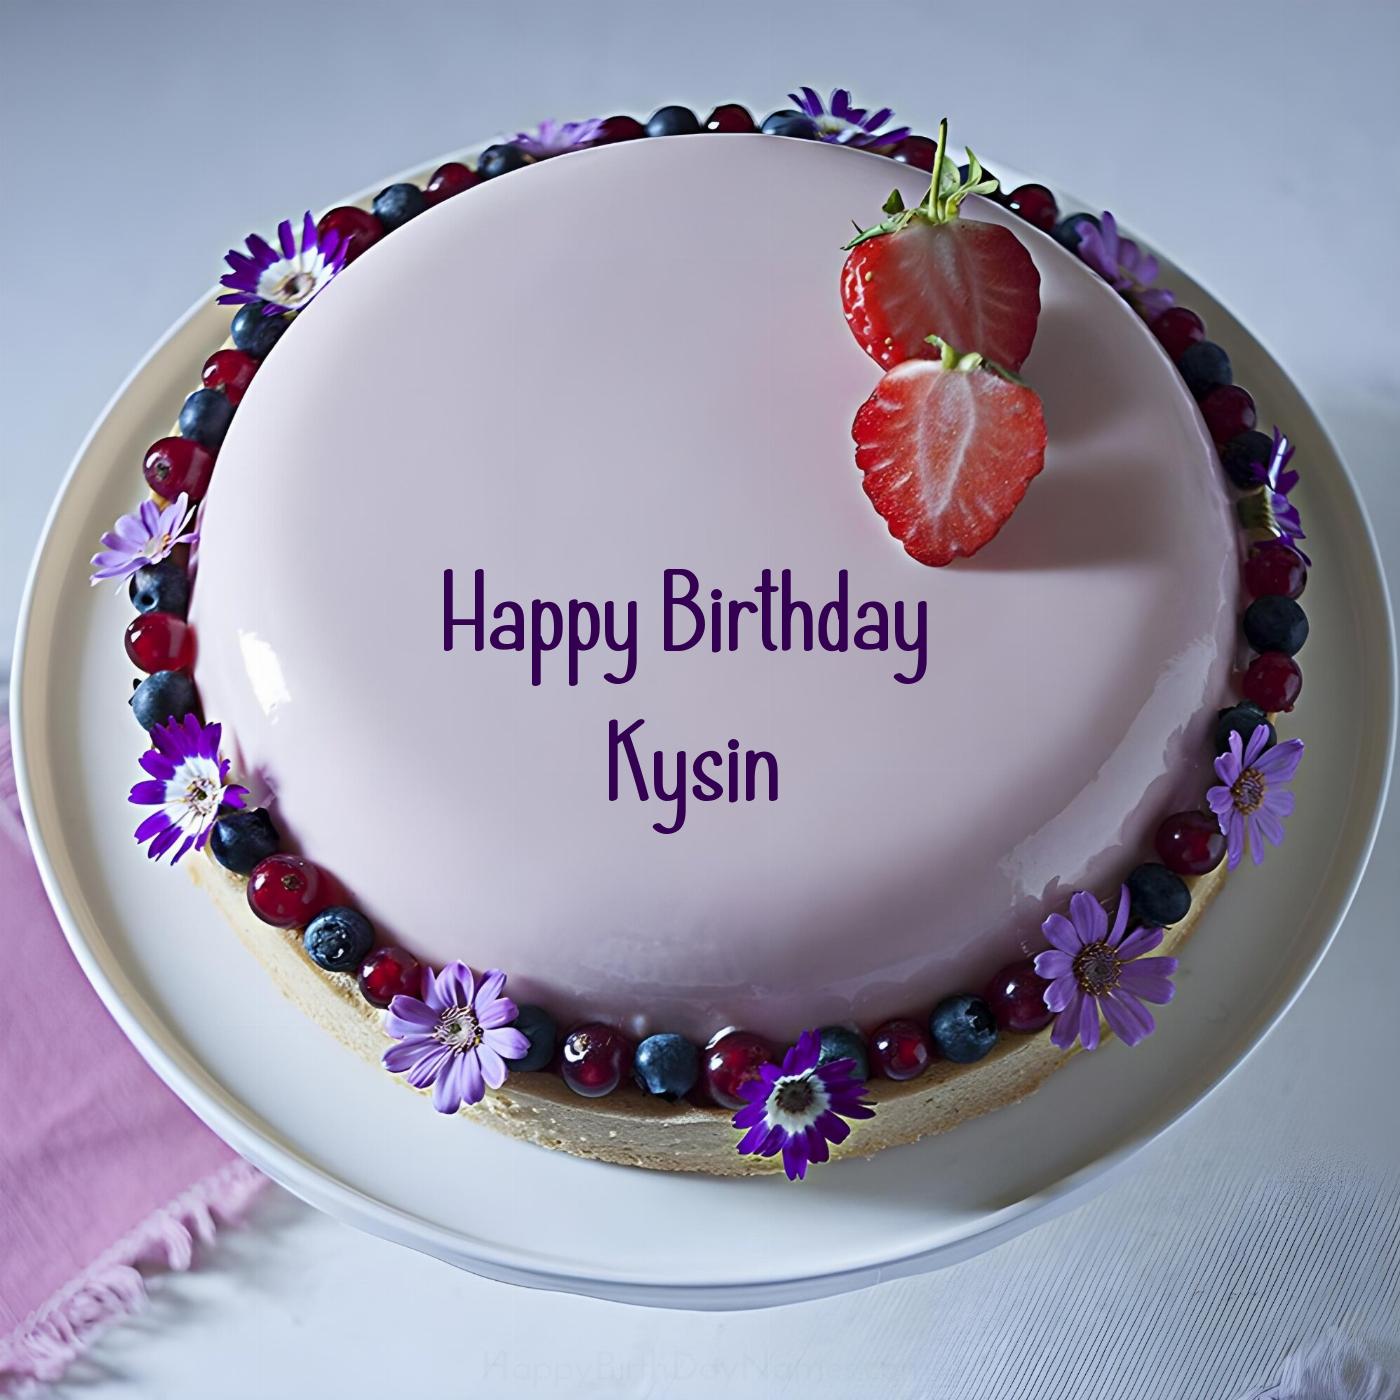 Happy Birthday Kysin Strawberry Flowers Cake